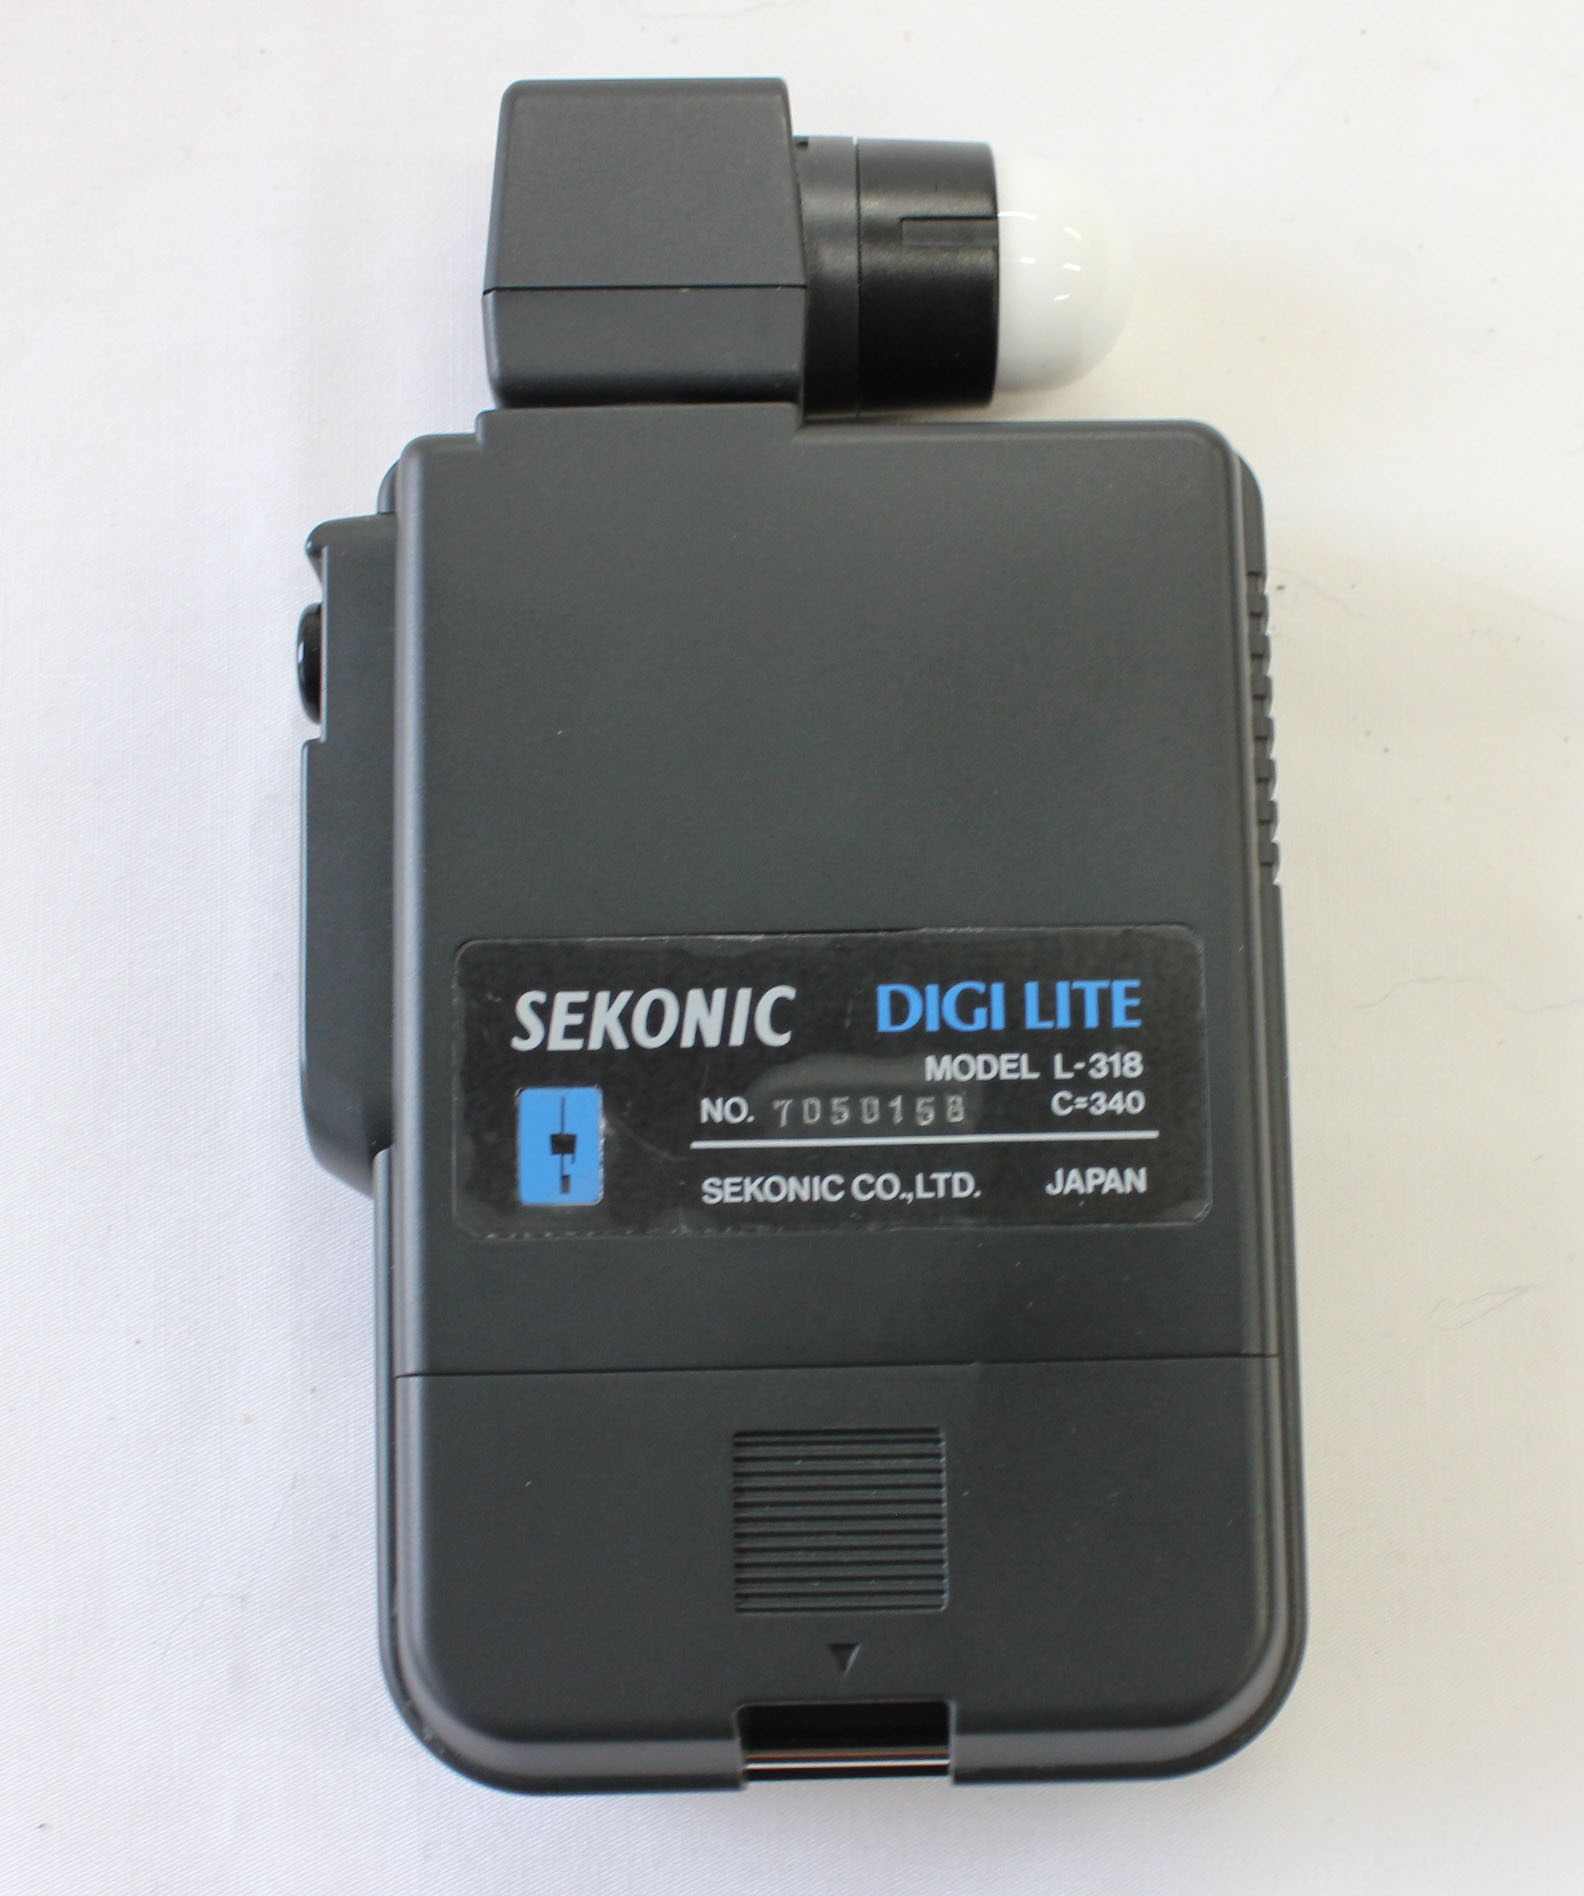  Sekonic Digi Lite Model L-318 Digital Lite Meter with Case from Japan Photo 4